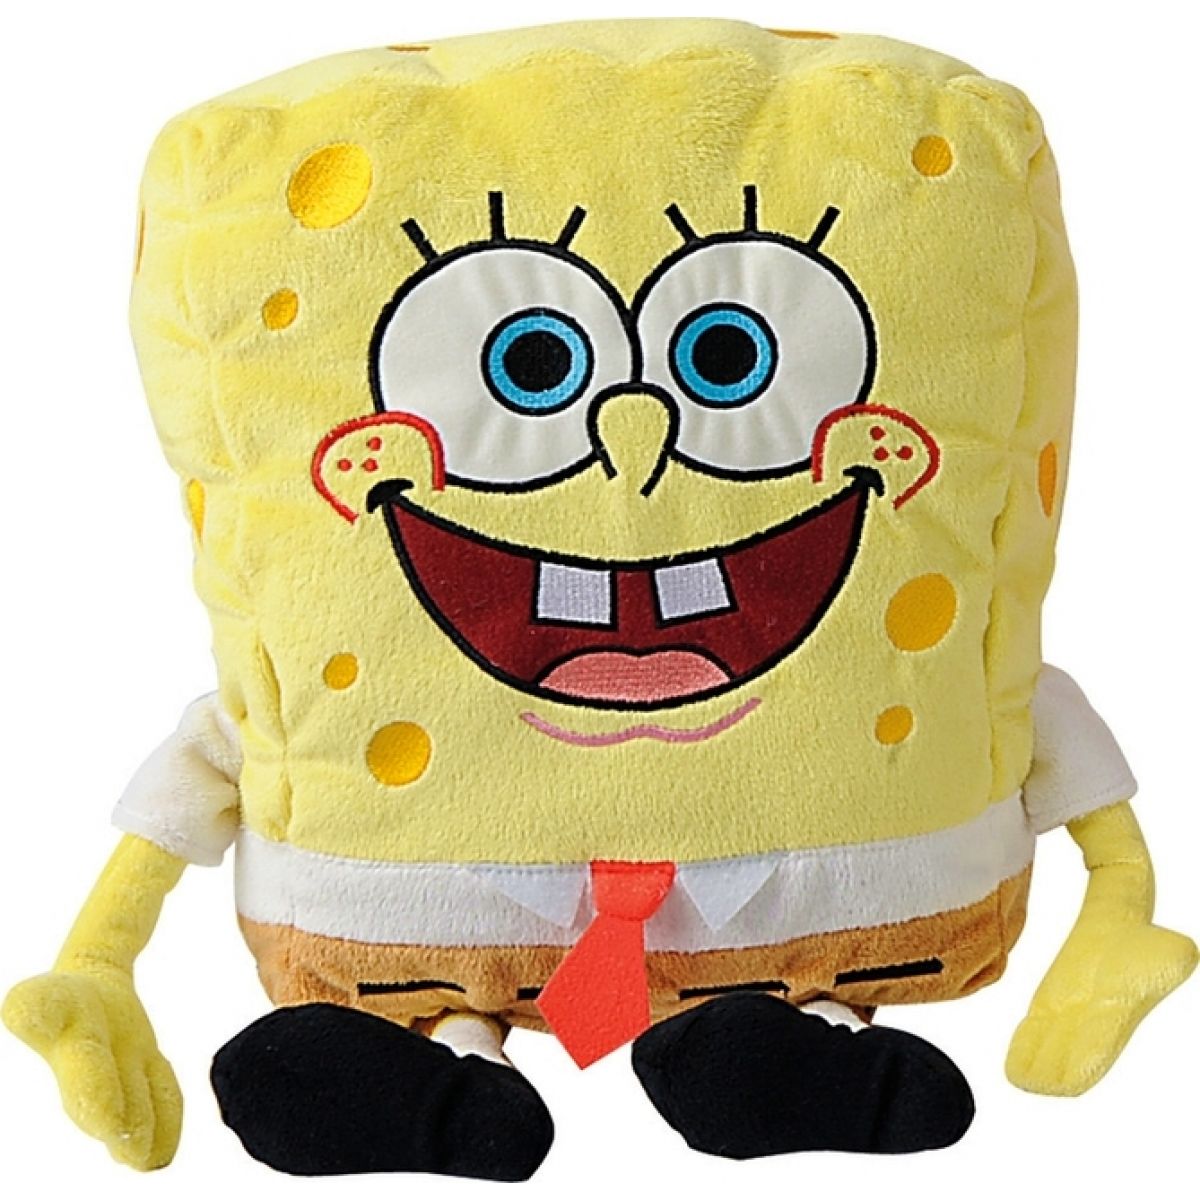 Simba SpongeBob Plyšová postavička 45cm - SpongeBob - Poškozený obal